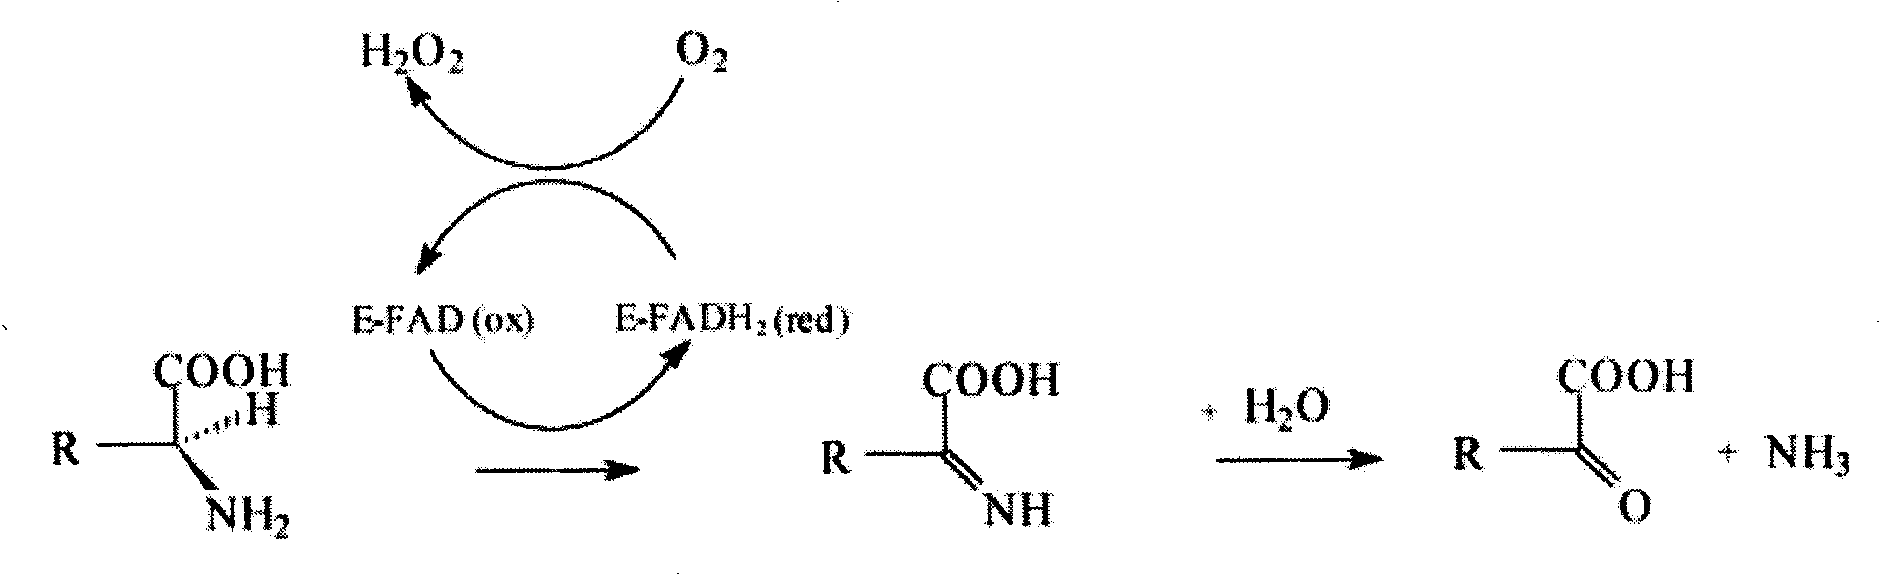 Biocatalysis method for preparing Alpha ketoglutarate from L-soda glutamate